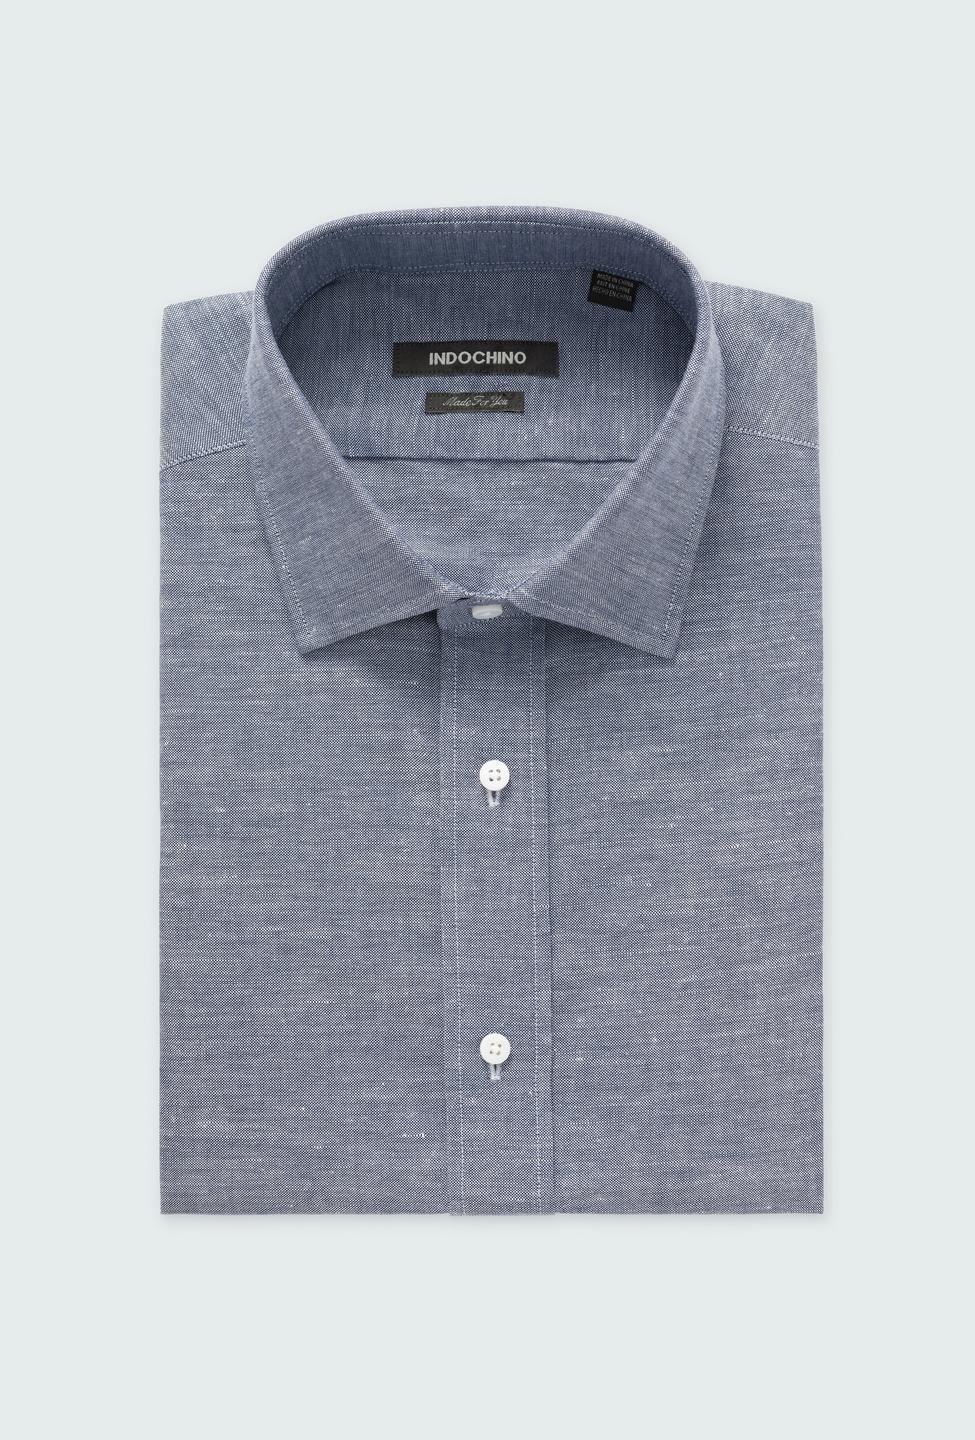 Navy shirt - Sudbury Solid Design from Premium Indochino Collection